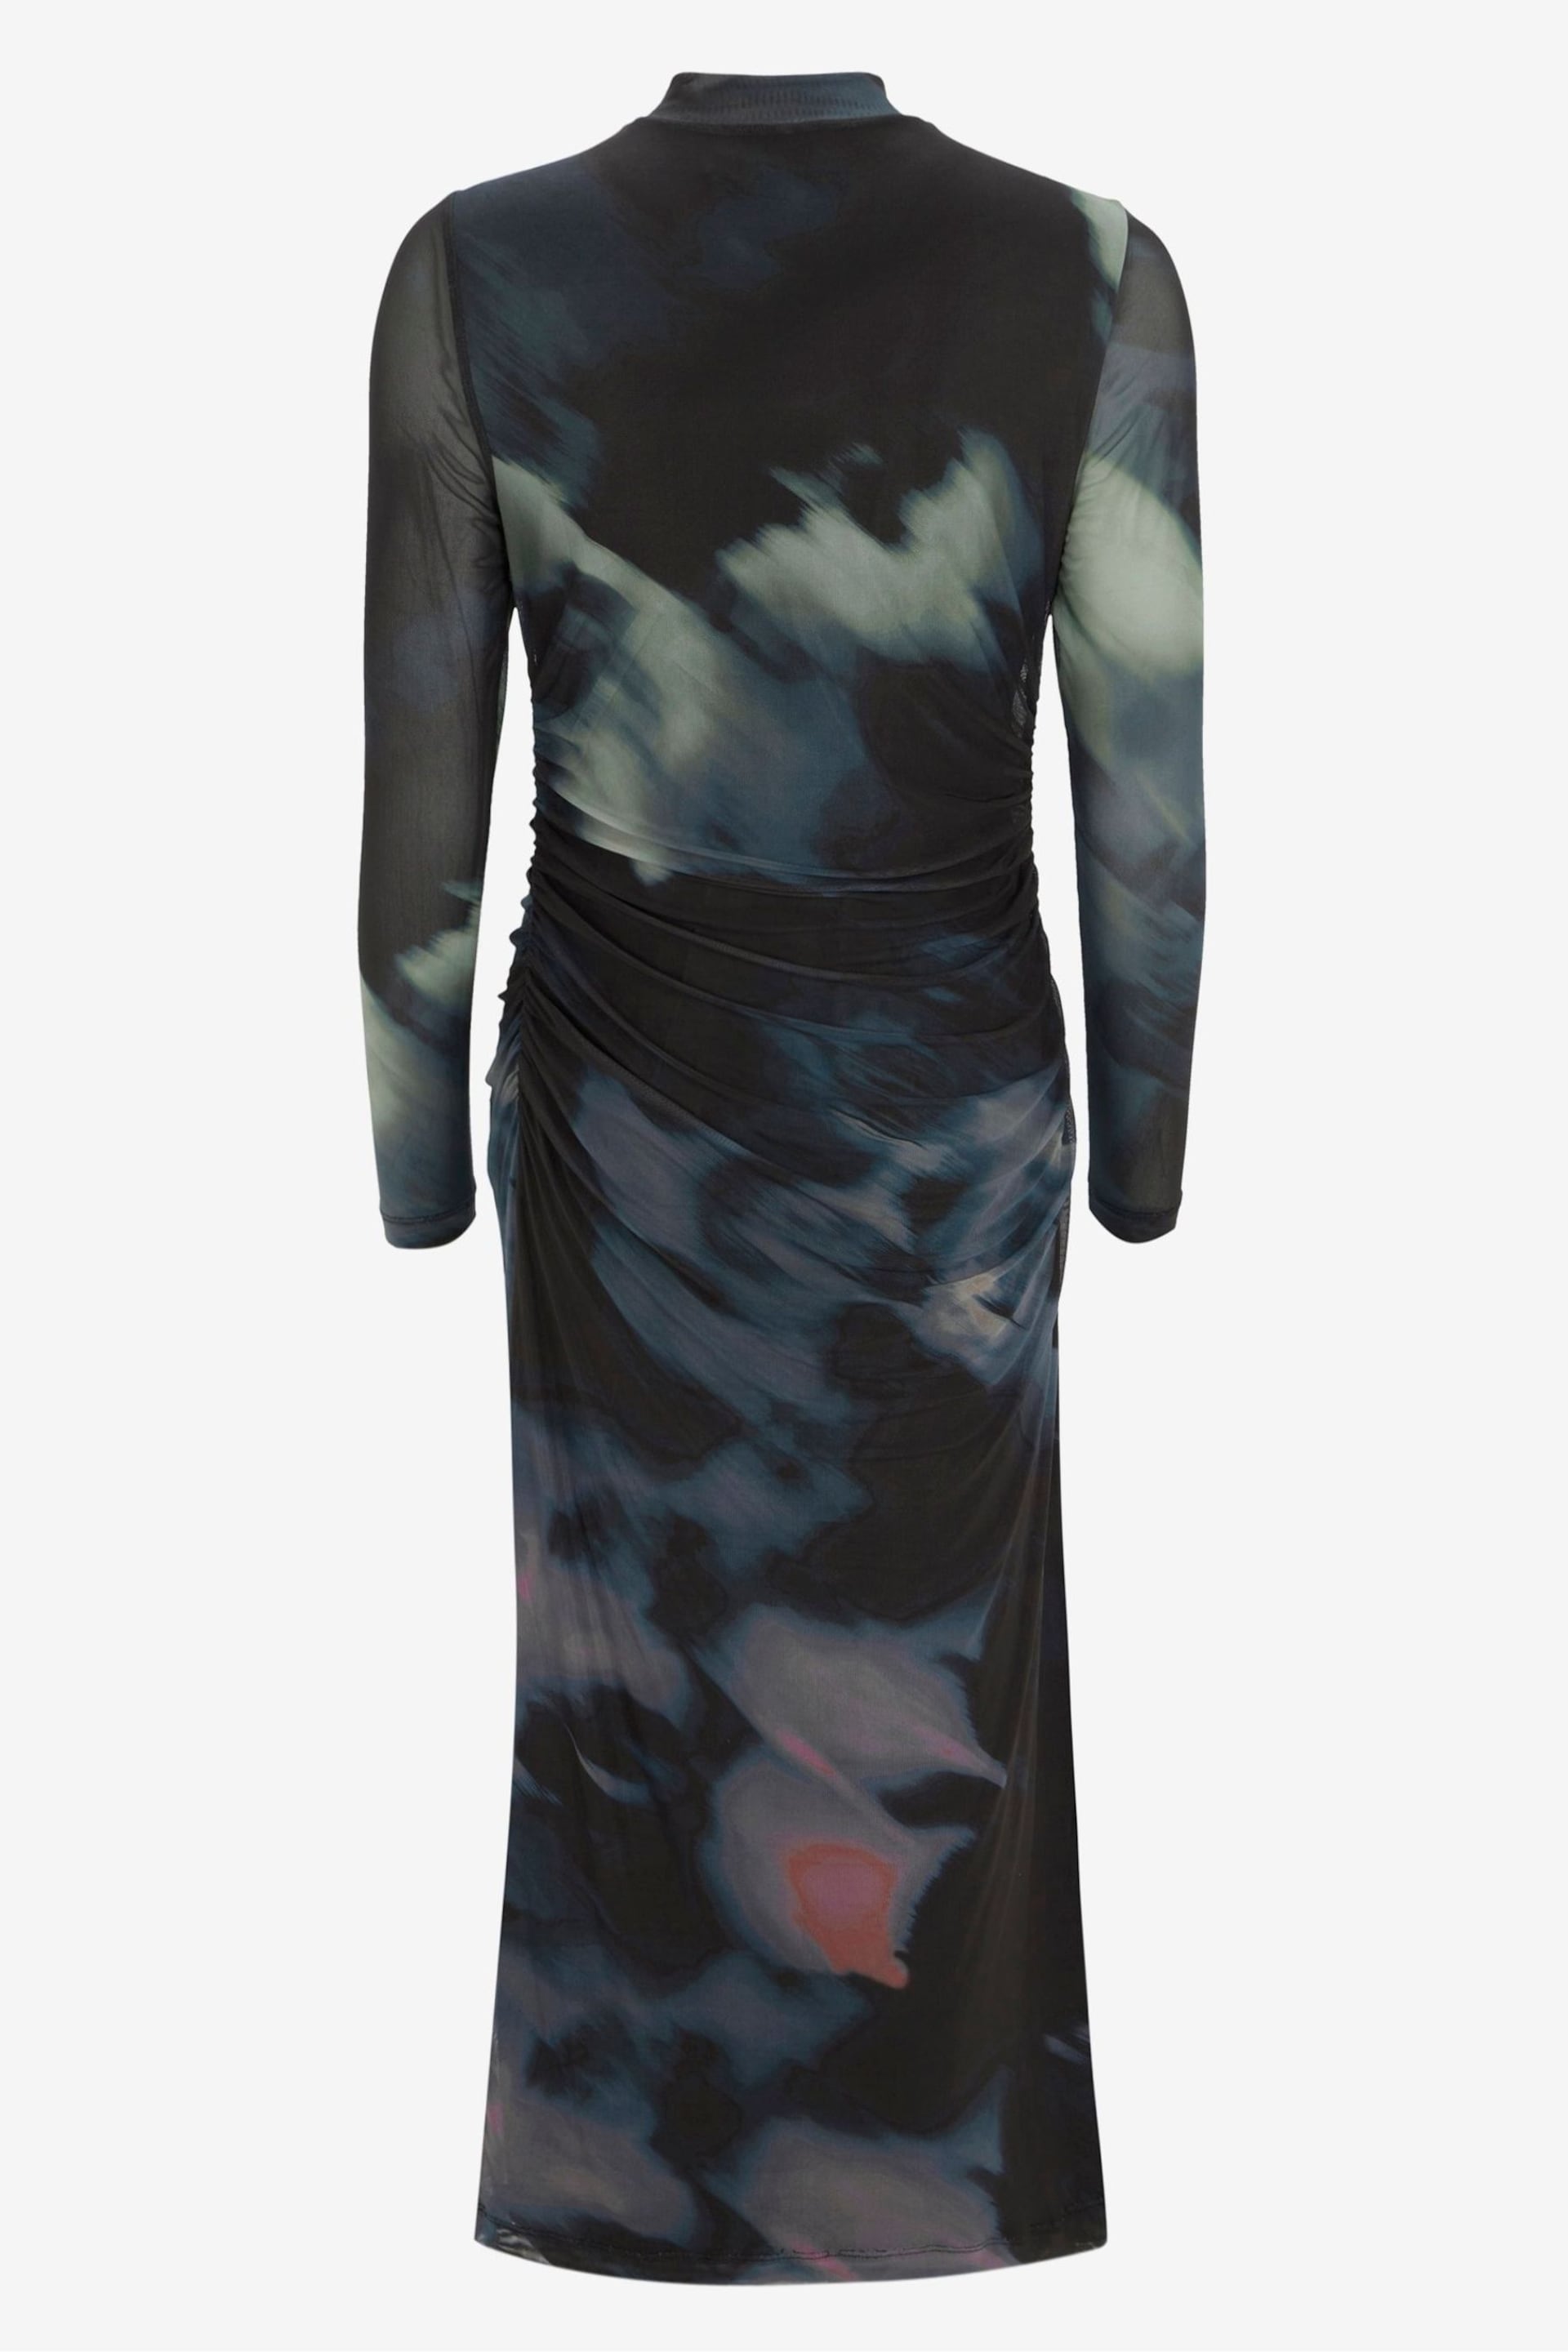 Mint Velvet Black Black Print Mesh Midi Dress - Image 6 of 6